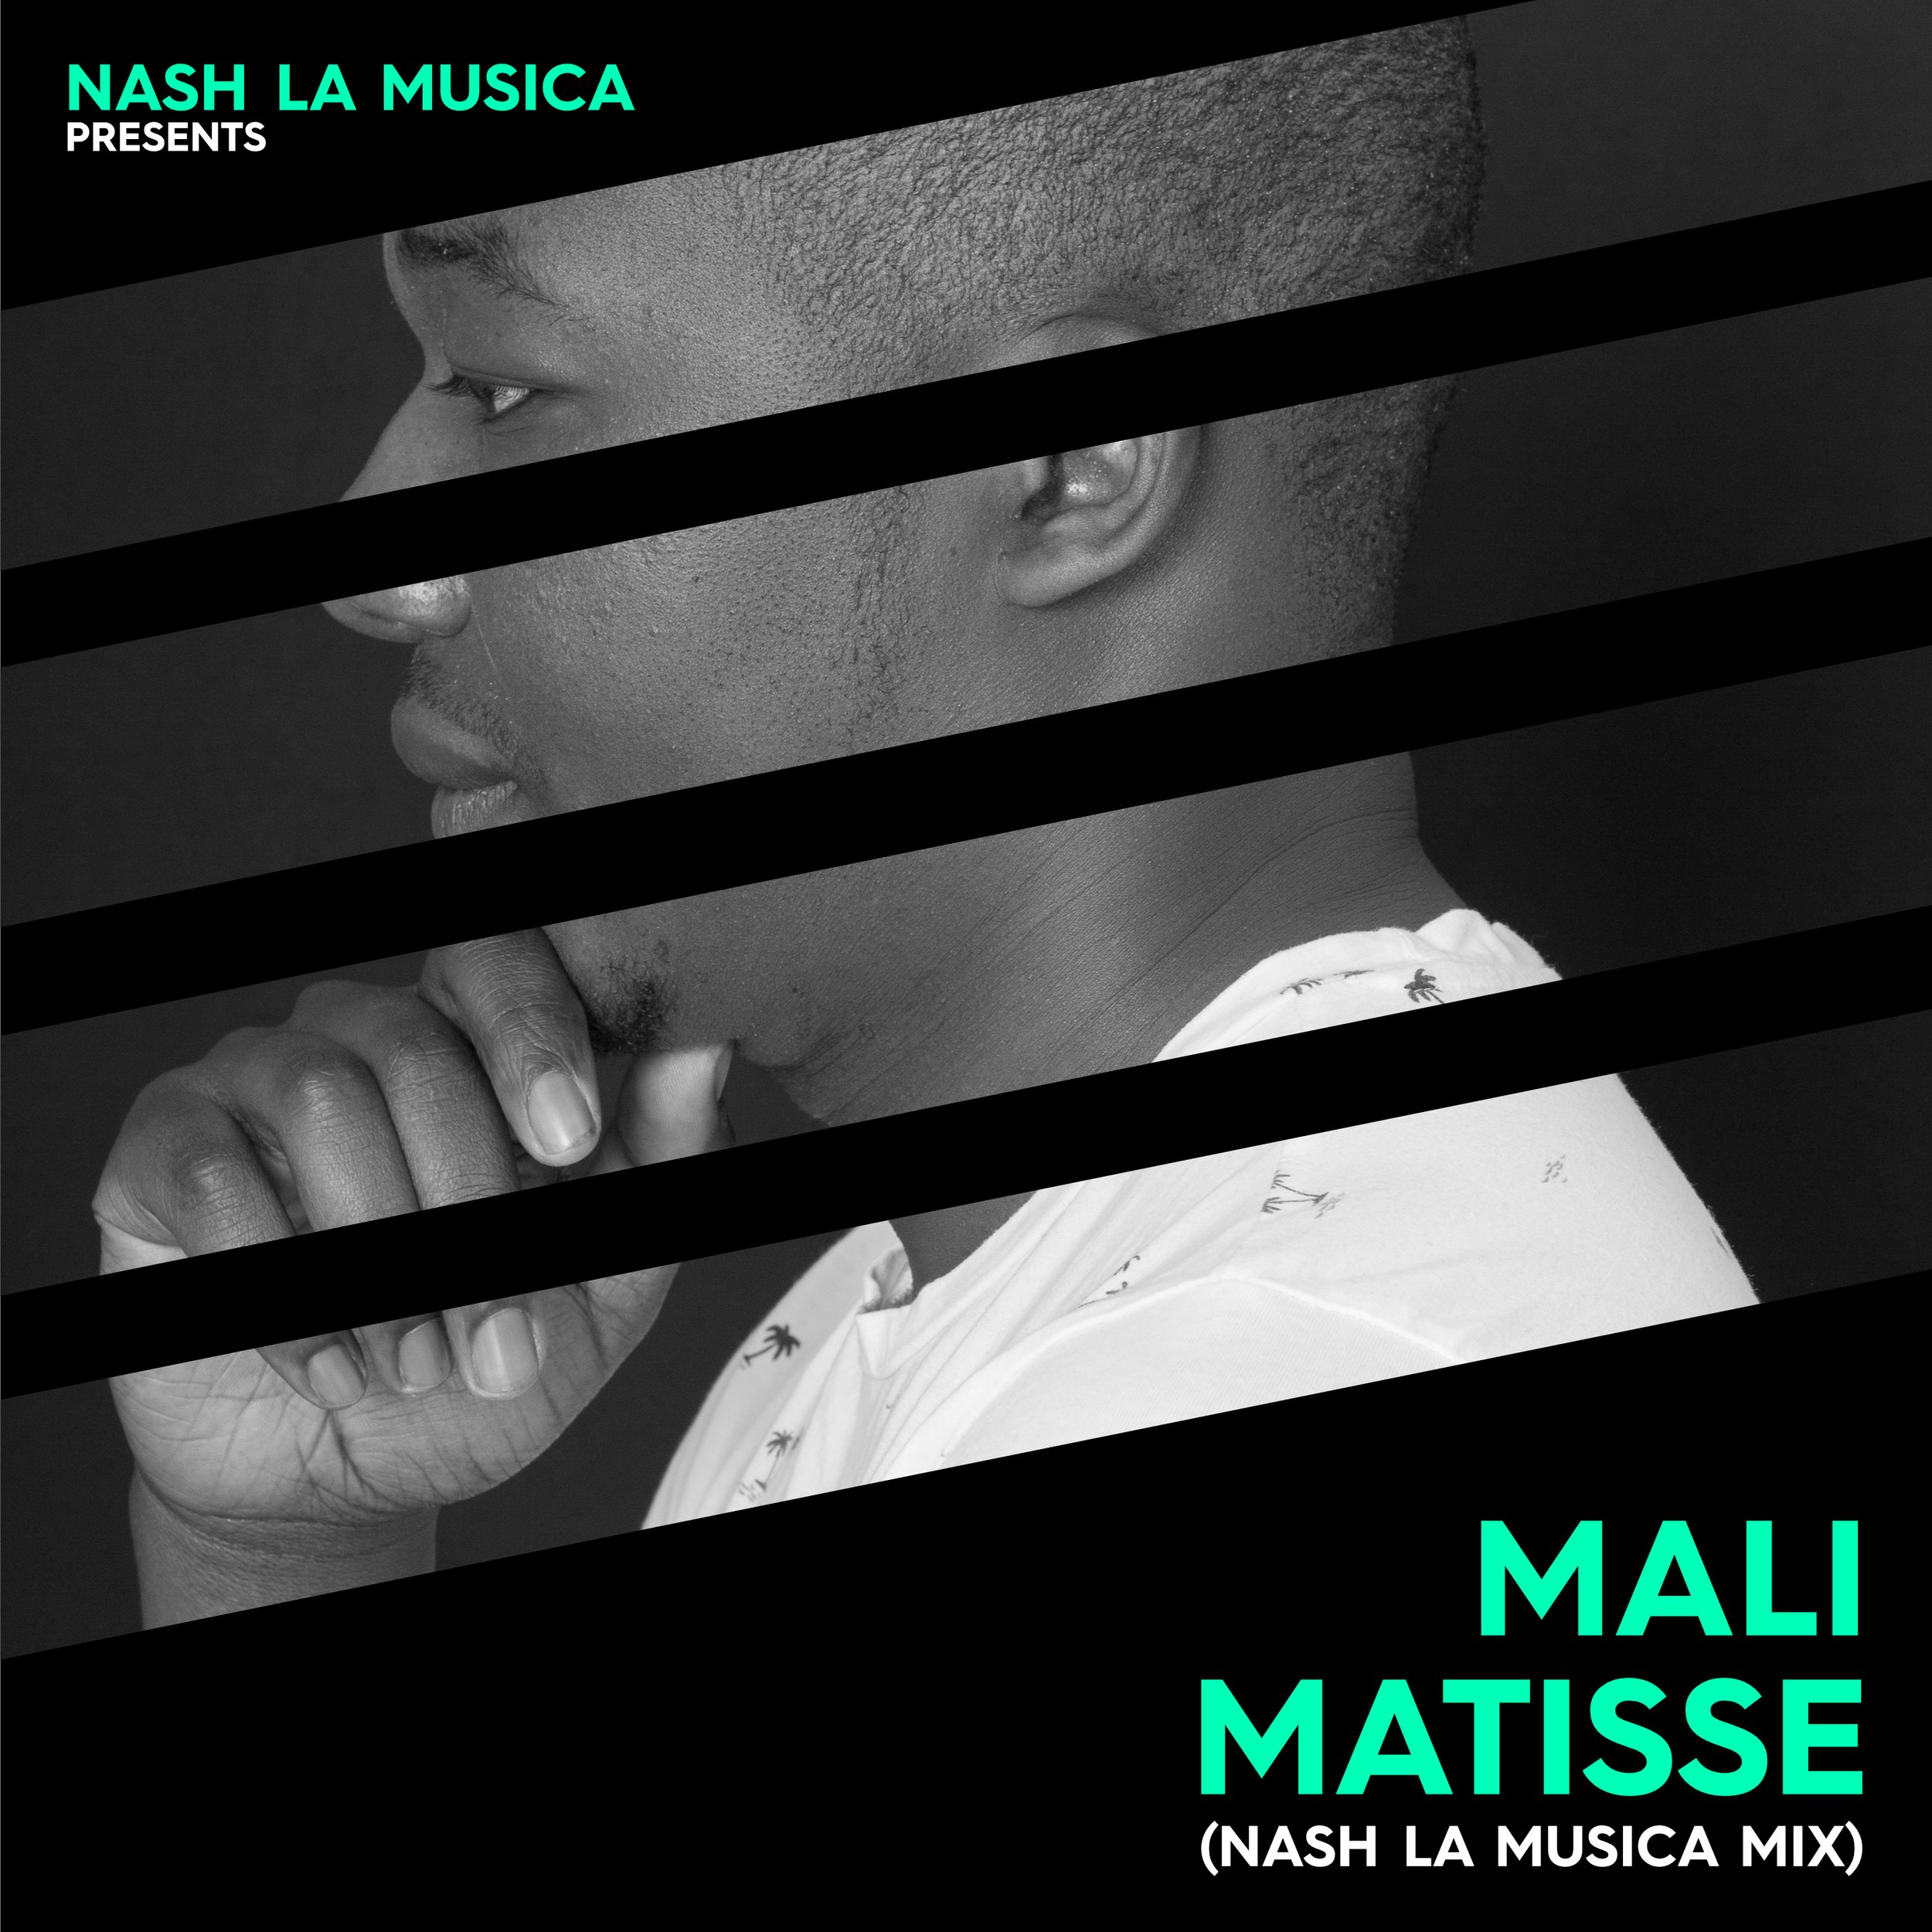 Nash La Musica Presents Mali Matisse - Artwork.jpg